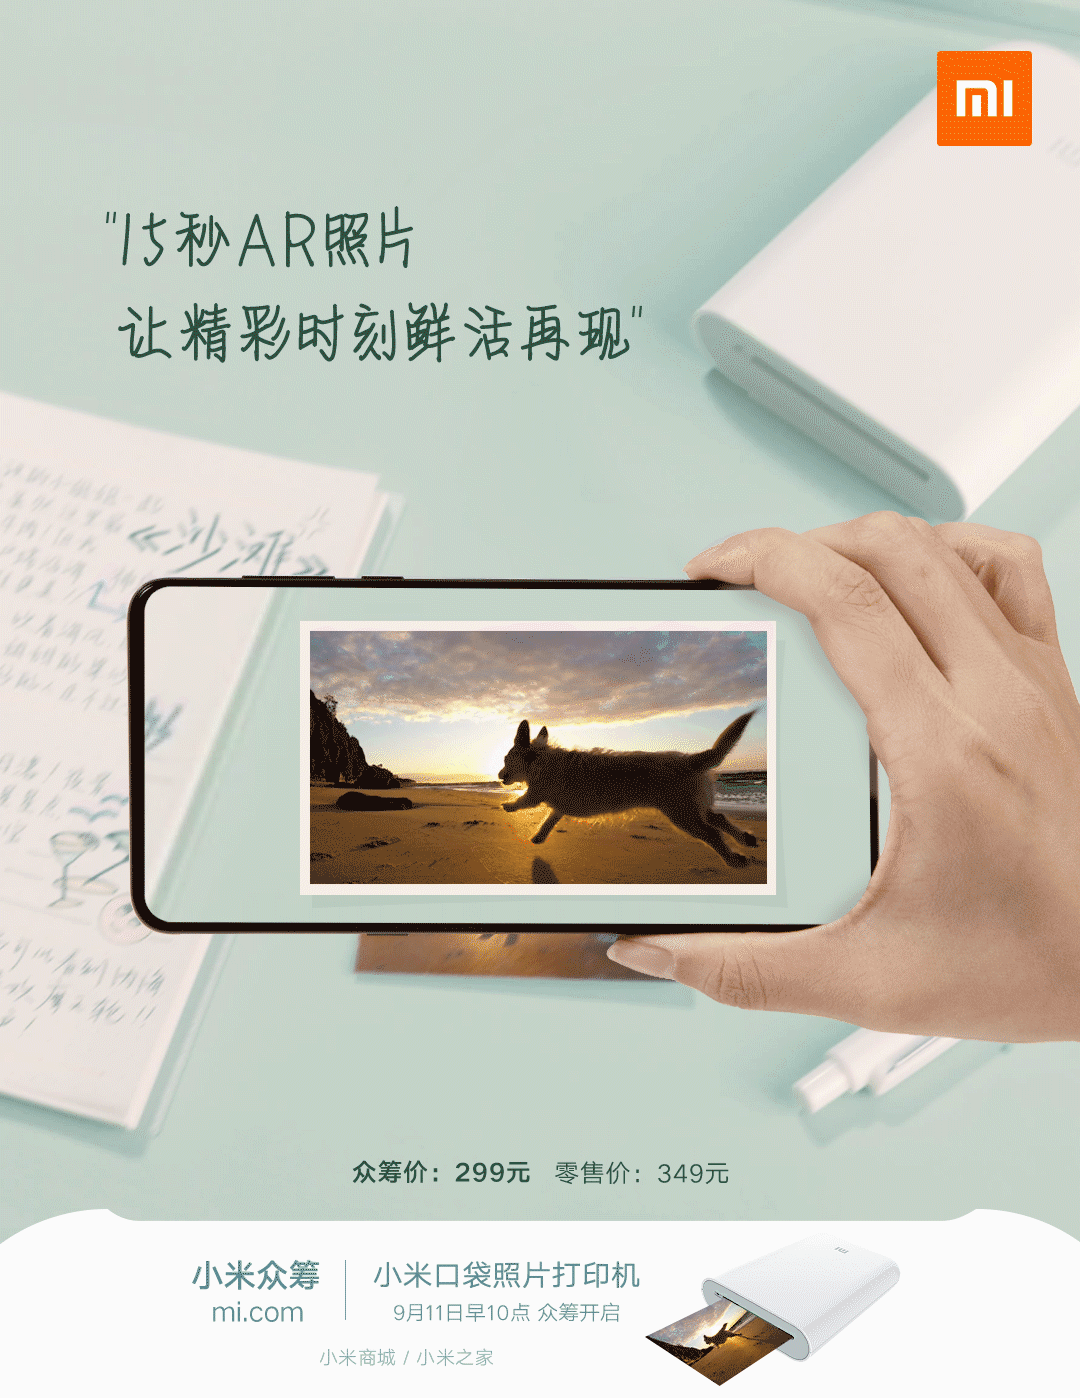 Printer Foto Mijia Baru AR, Xiaomi augmented reality printer. Berita Terkini Xiaomi